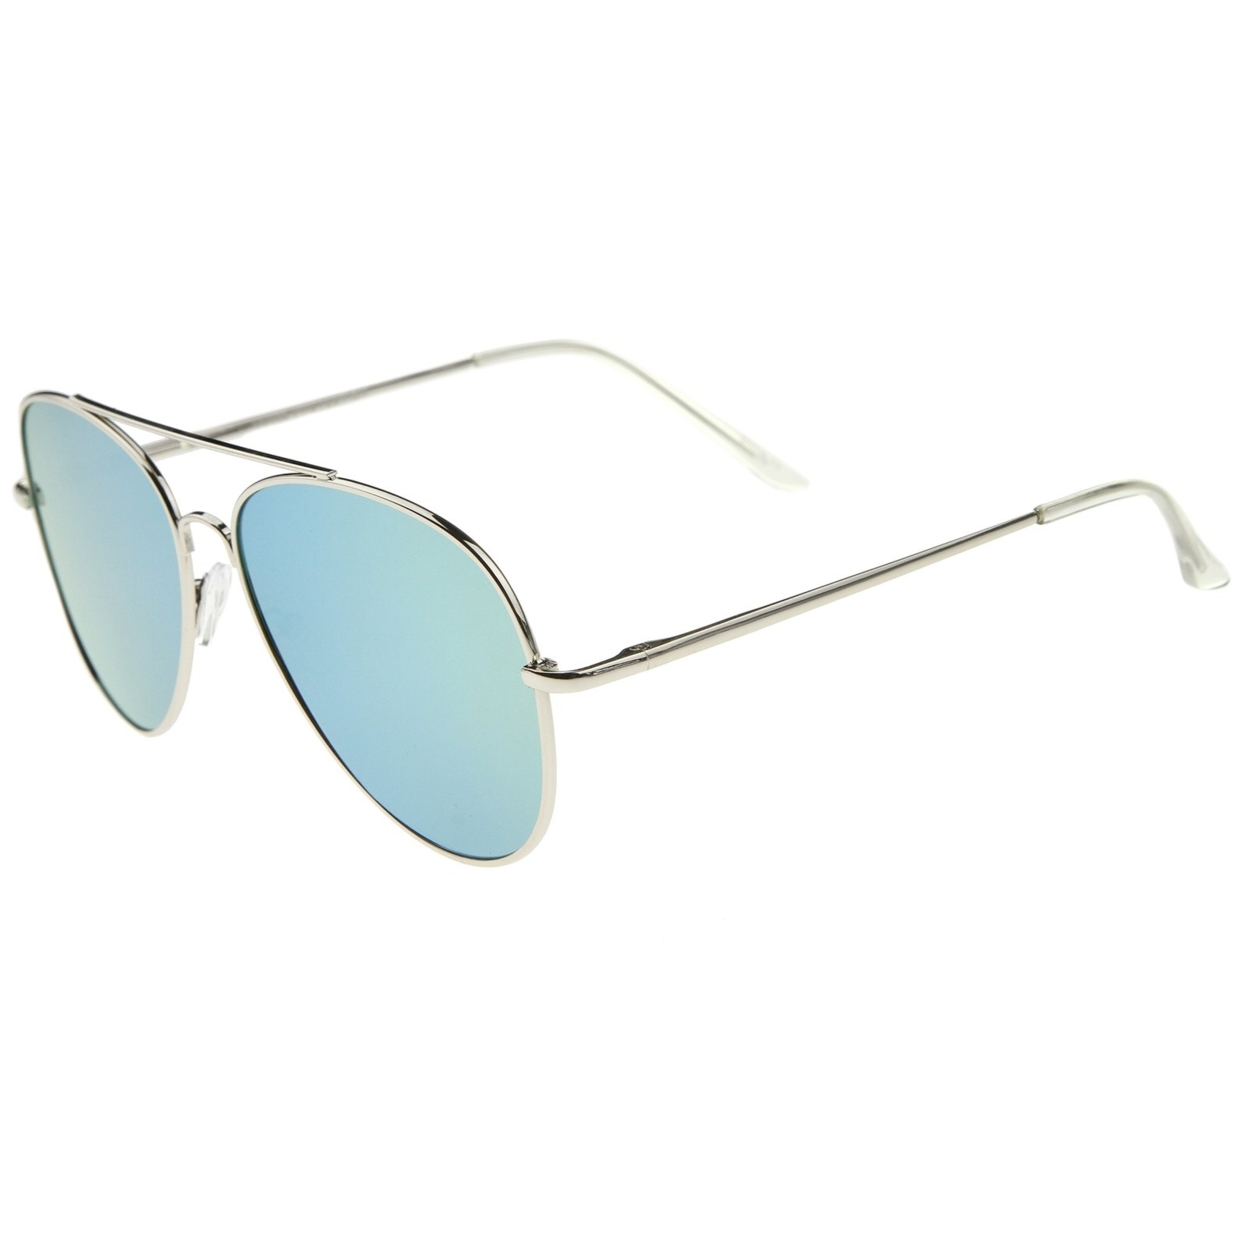 Large Full Metal Color Mirror Teardrop Flat Lens Aviator Sunglasses 60mm - Silver / Purple Mirror